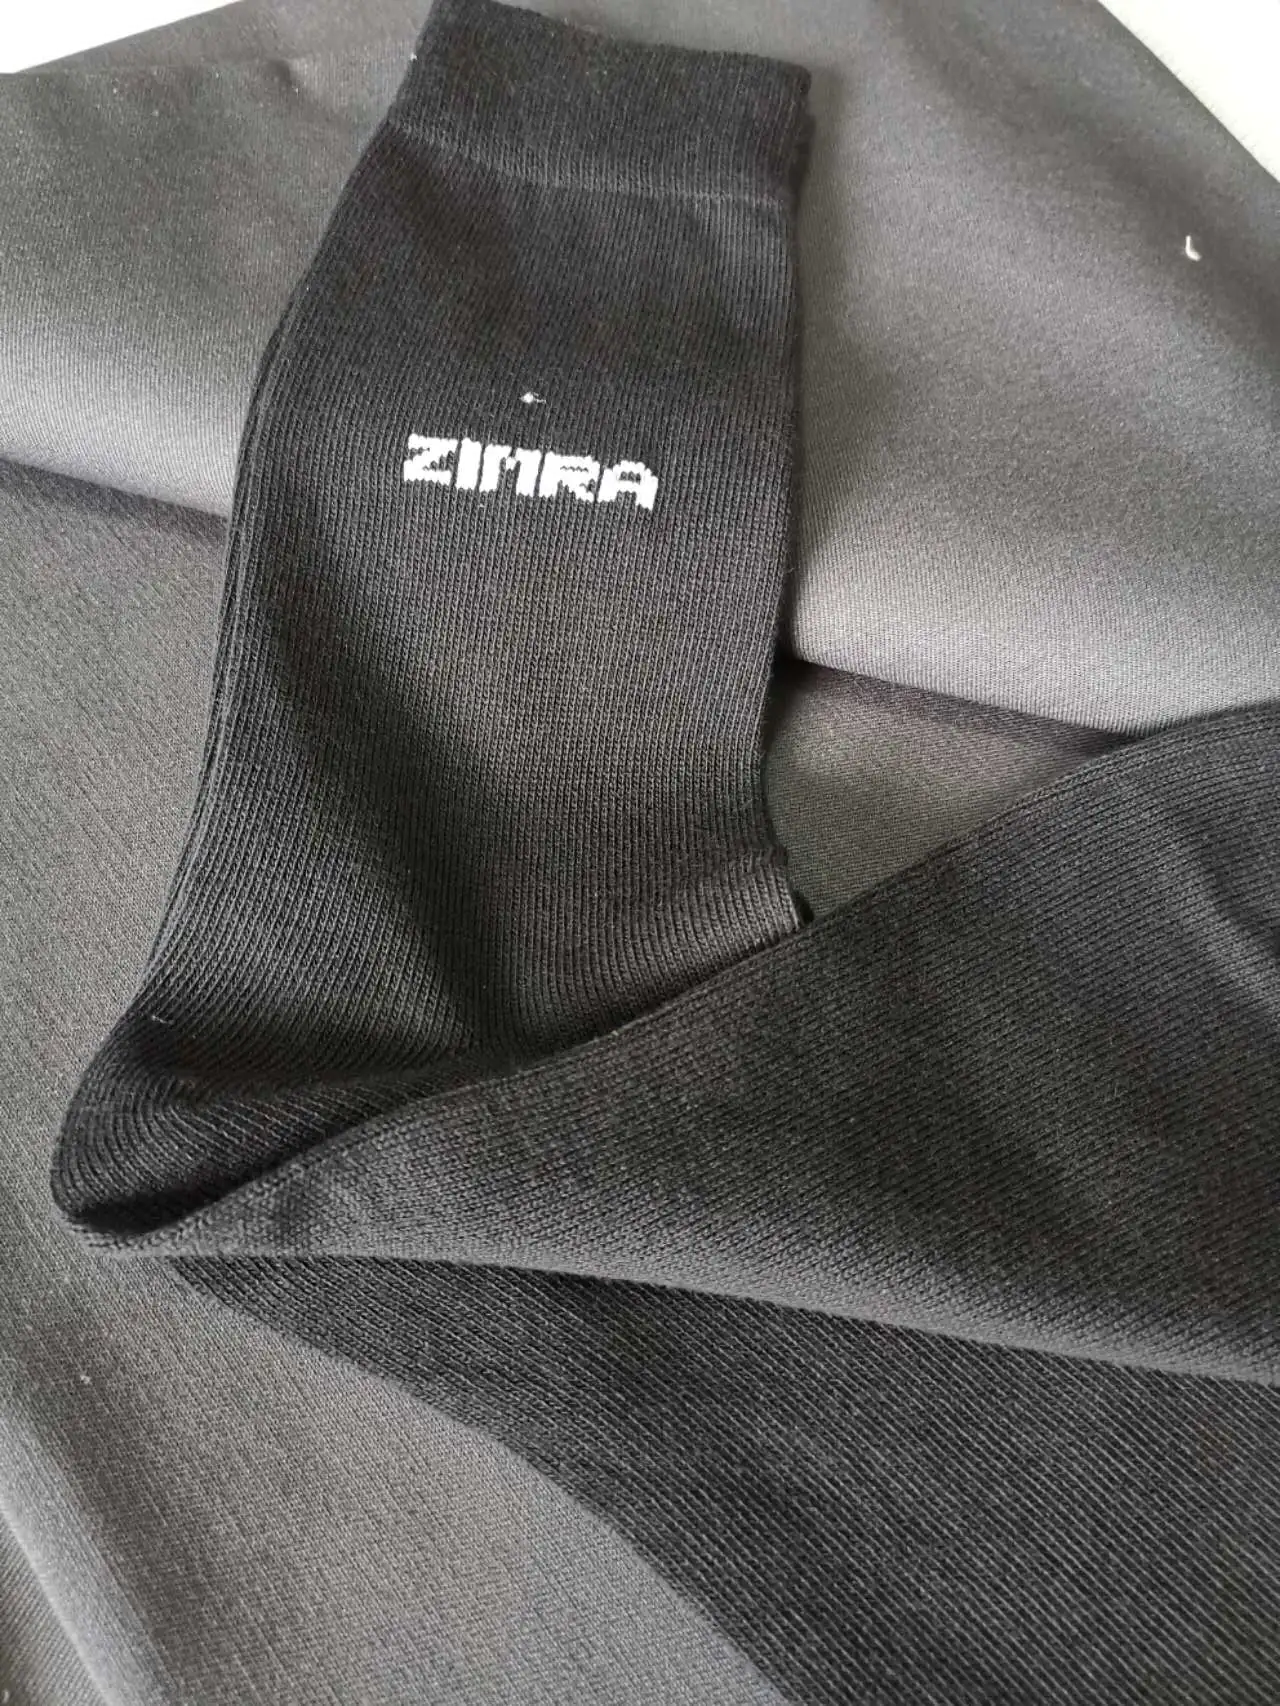 Zimbabwe Revenue Authority (ZIMRA) certificated uniform fabric supplier - LAVENDER TEX